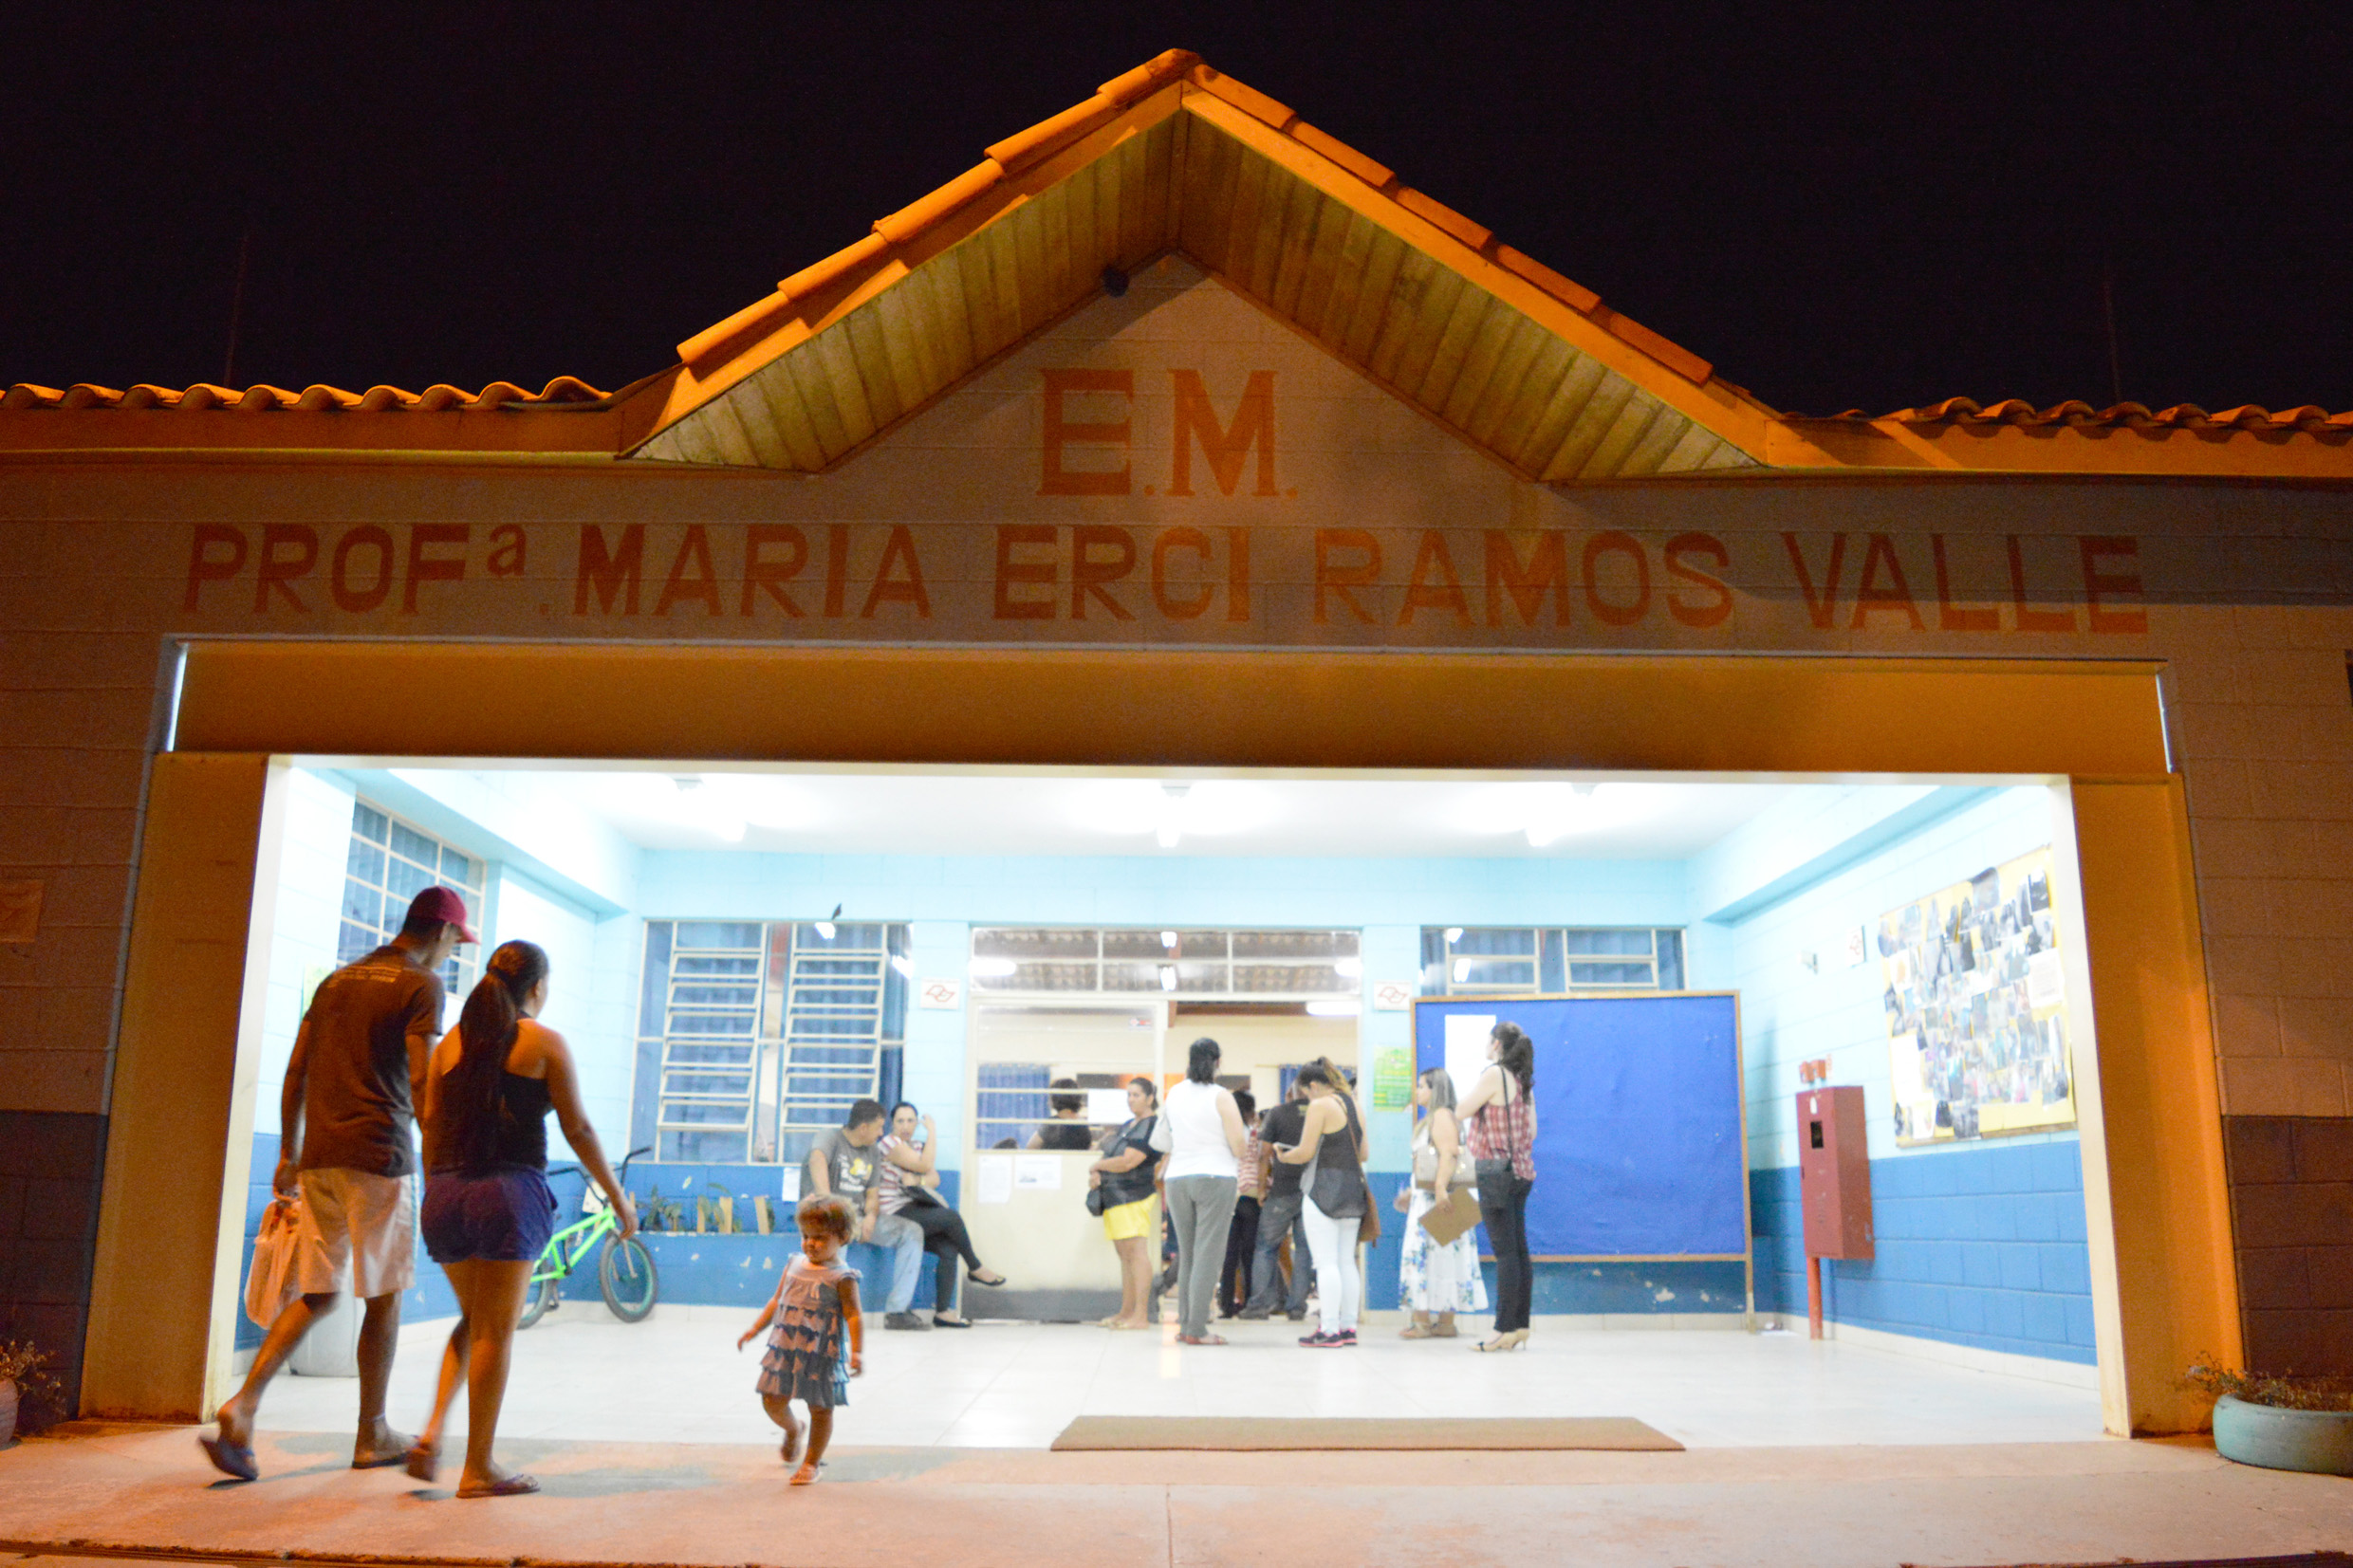 Reunio ocorreu na Escola Municipal Maria Erci Ramos Valle<a style='float:right;color:#ccc' href='https://www3.al.sp.gov.br/repositorio/noticia/N-10-2015/fg176986.jpg' target=_blank><i class='bi bi-zoom-in'></i> Clique para ver a imagem </a>